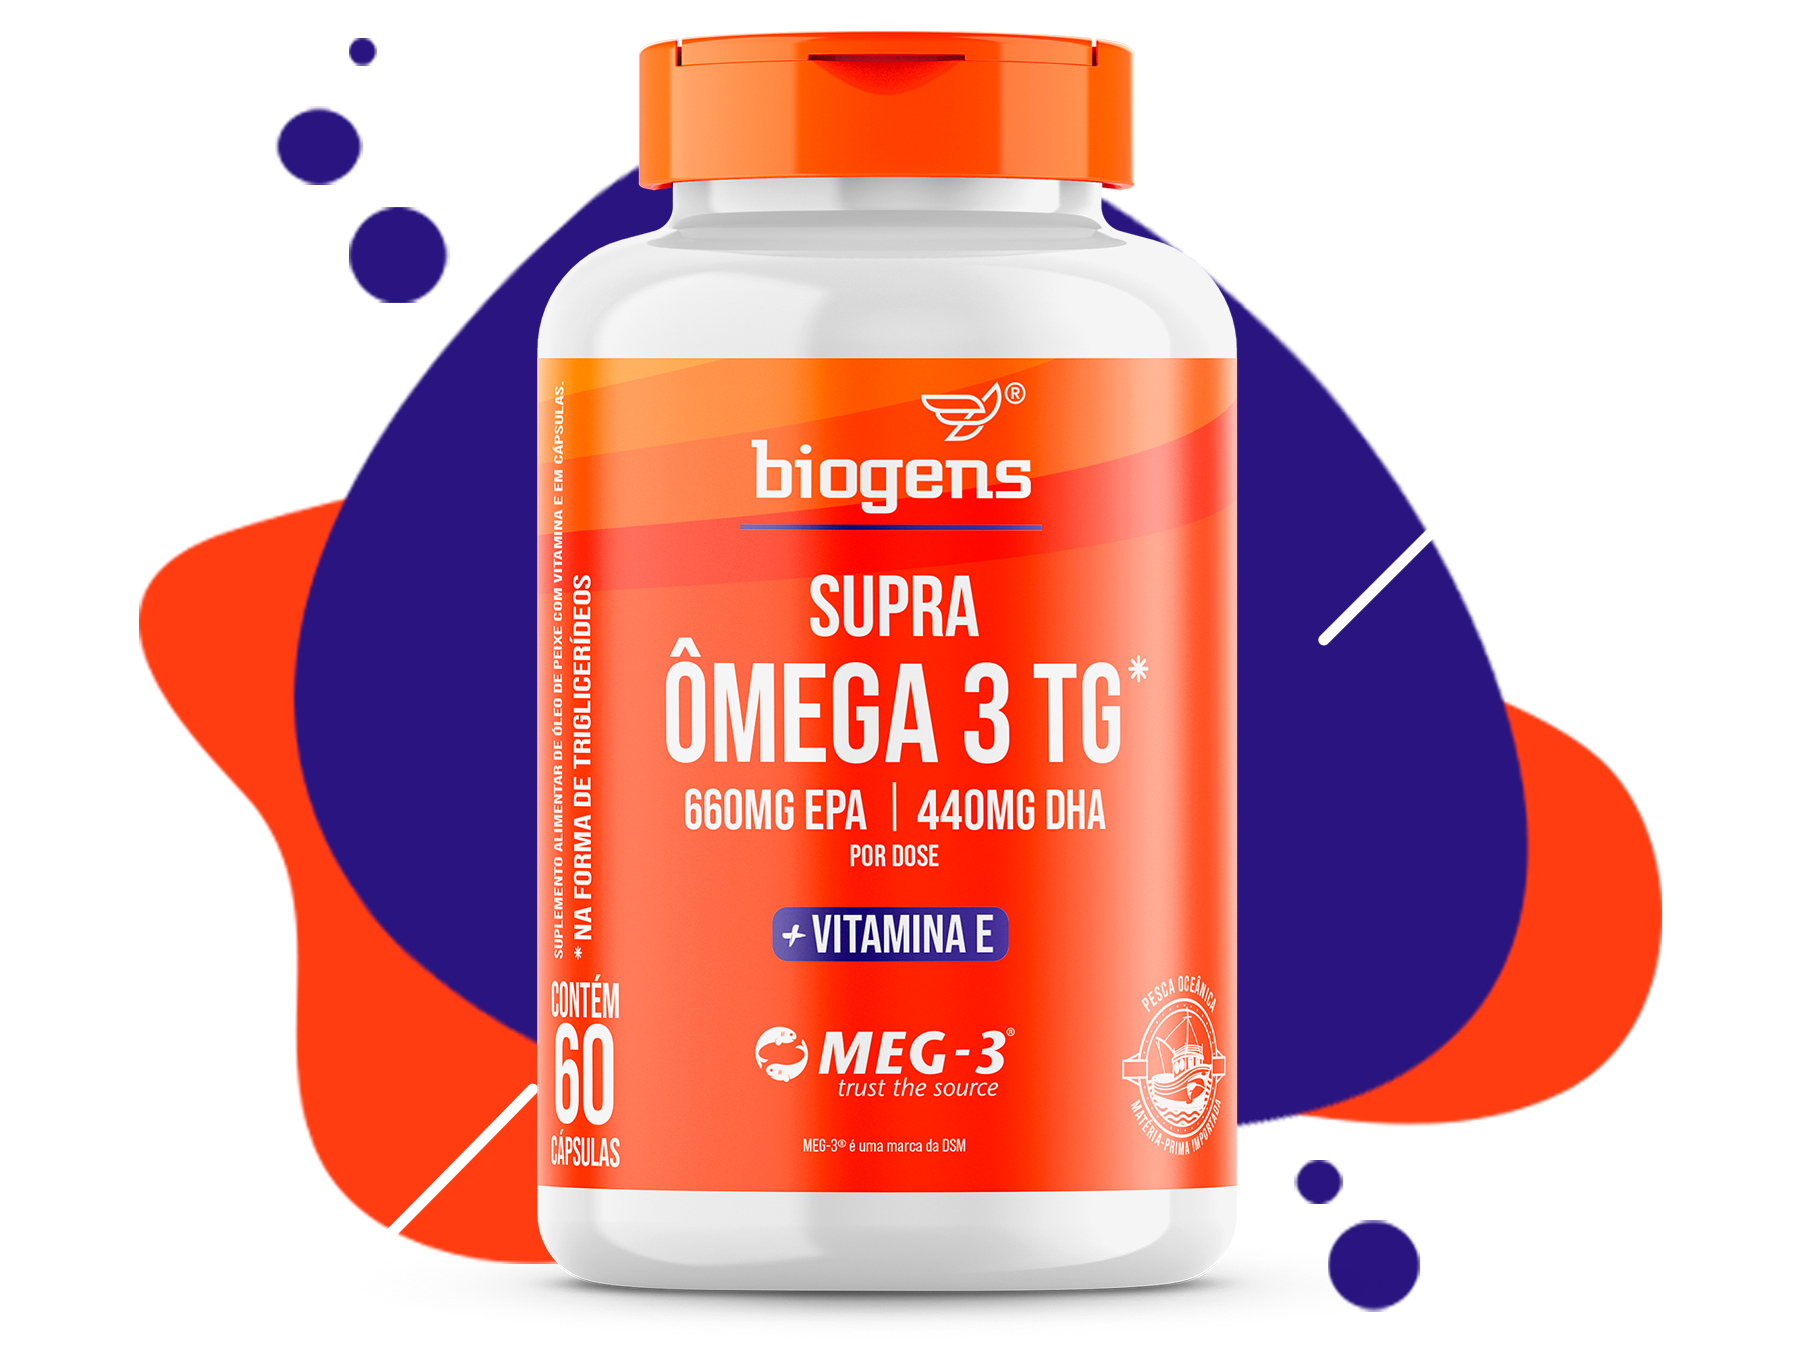 TG Omega-3